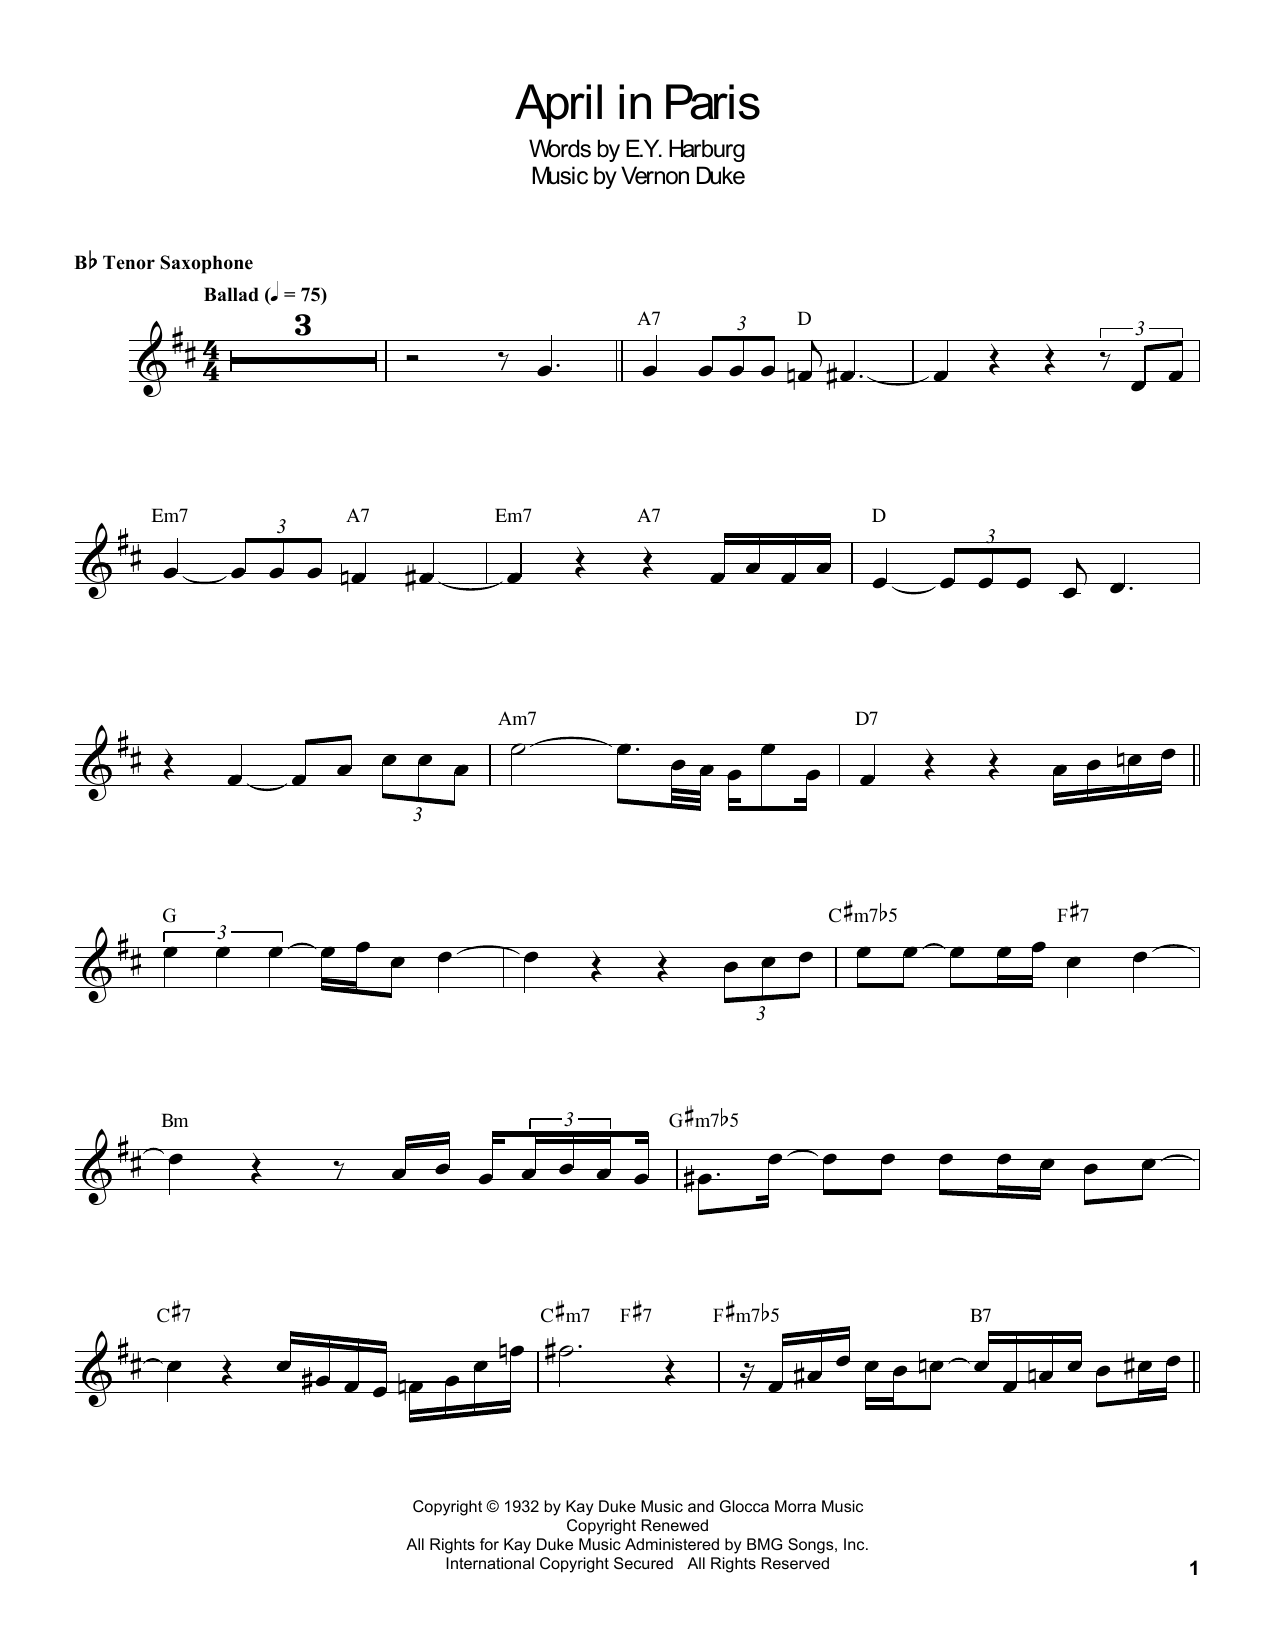 Coleman Hawkins April In Paris Sheet Music Notes & Chords for Tenor Sax Transcription - Download or Print PDF